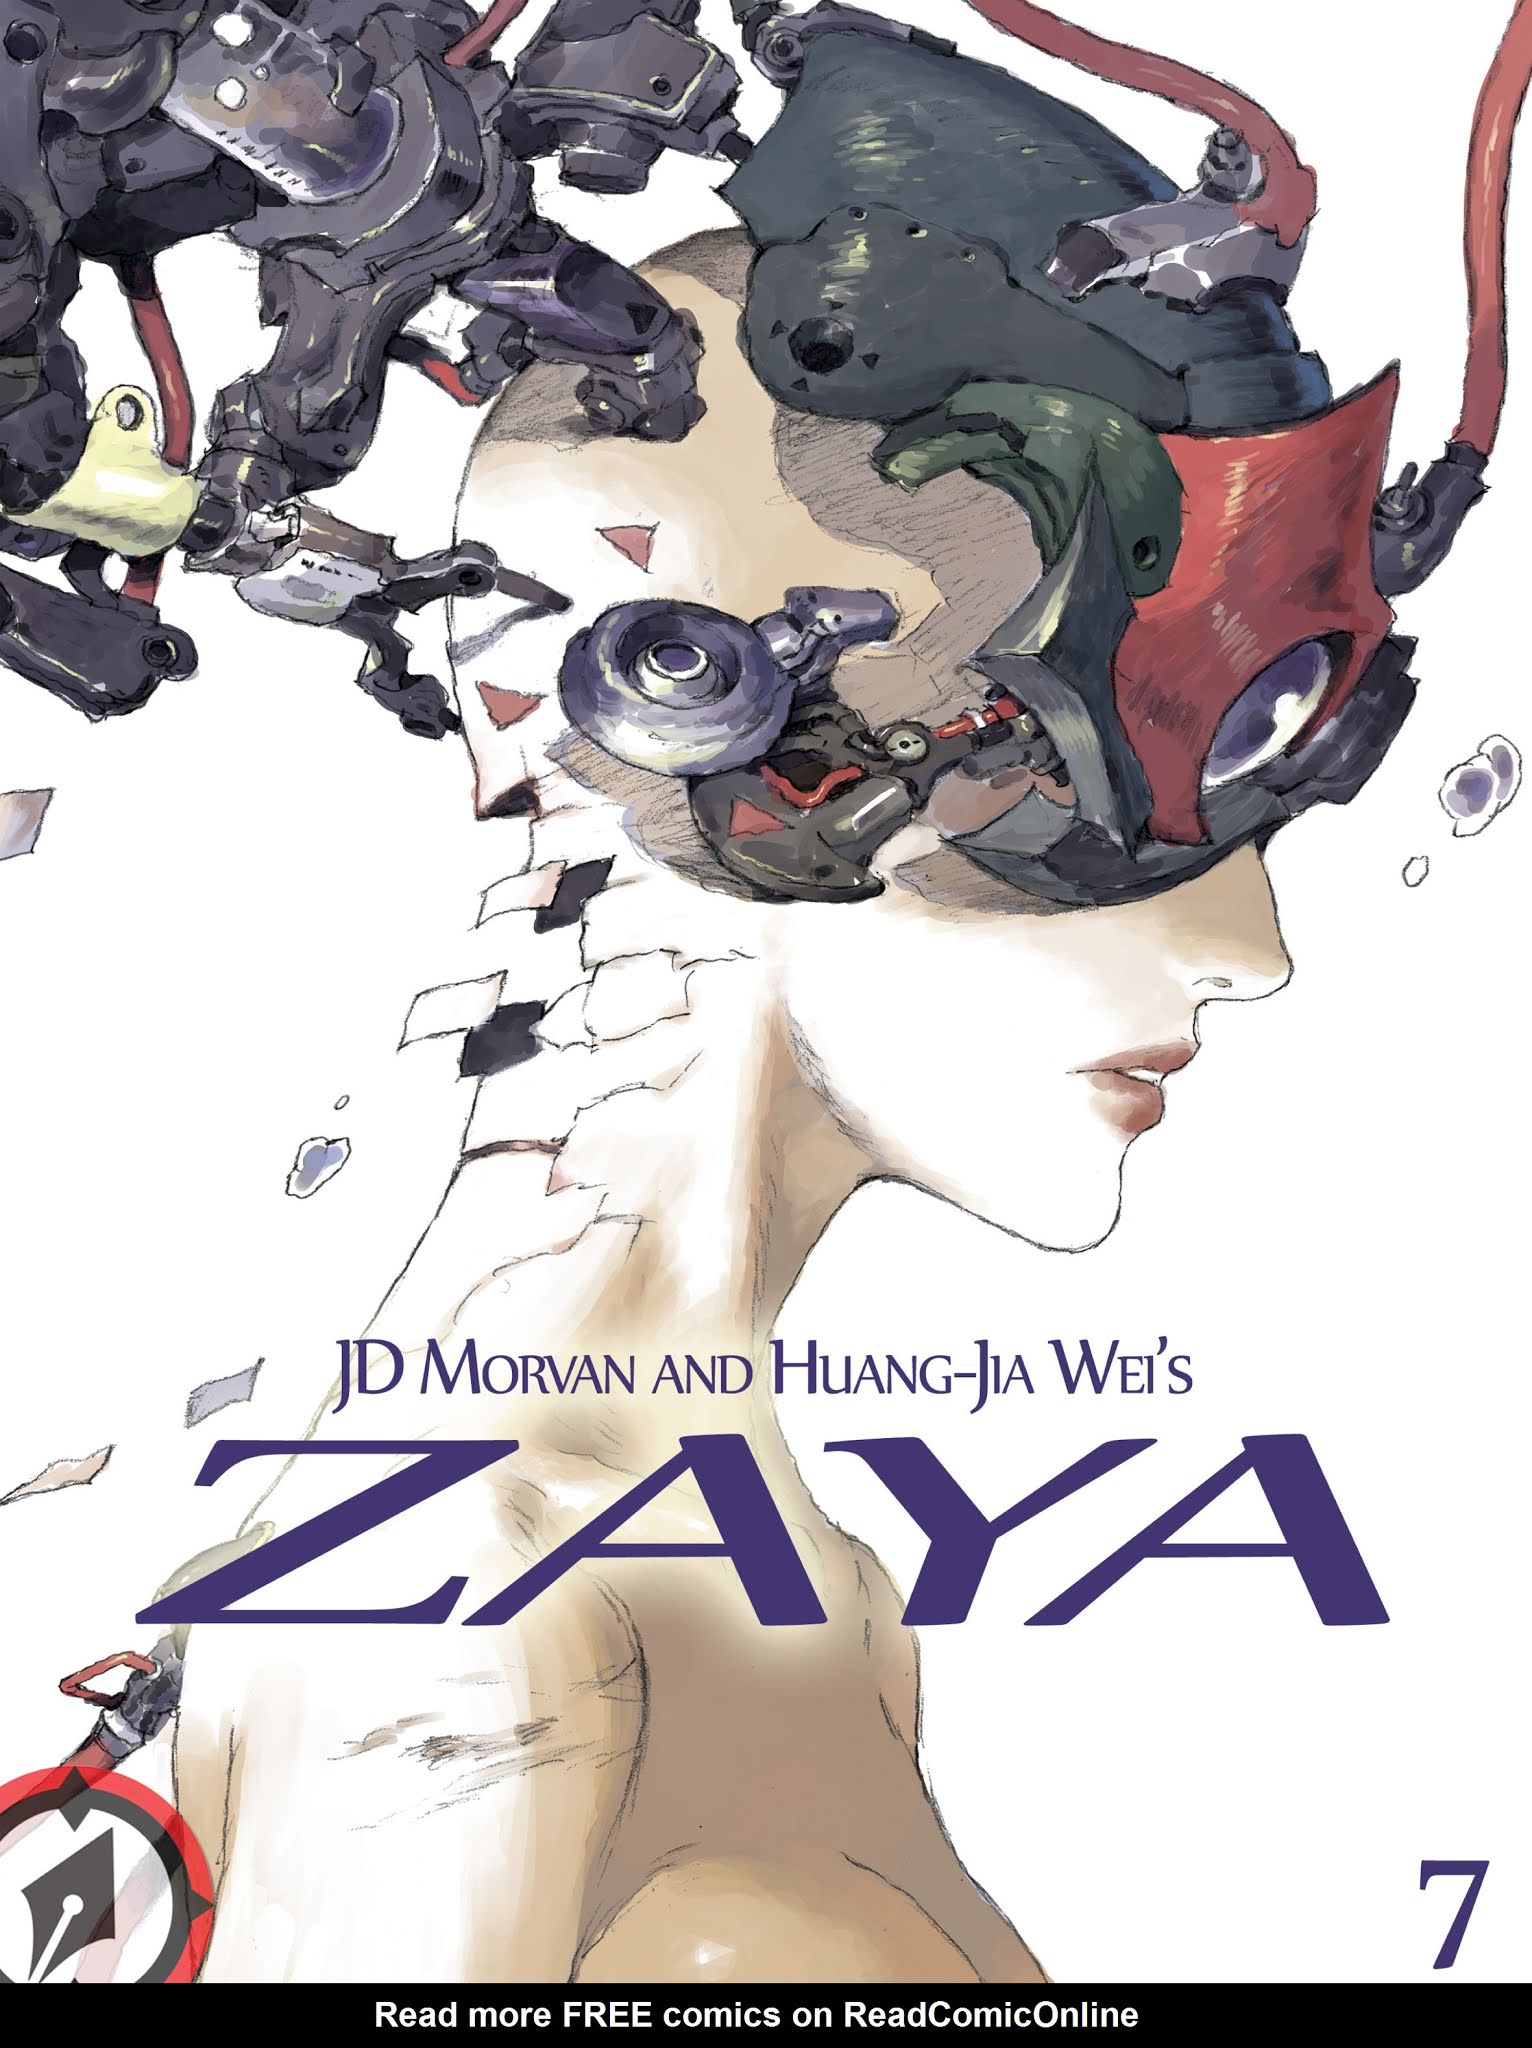 Read online Zaya comic -  Issue #7 - 1